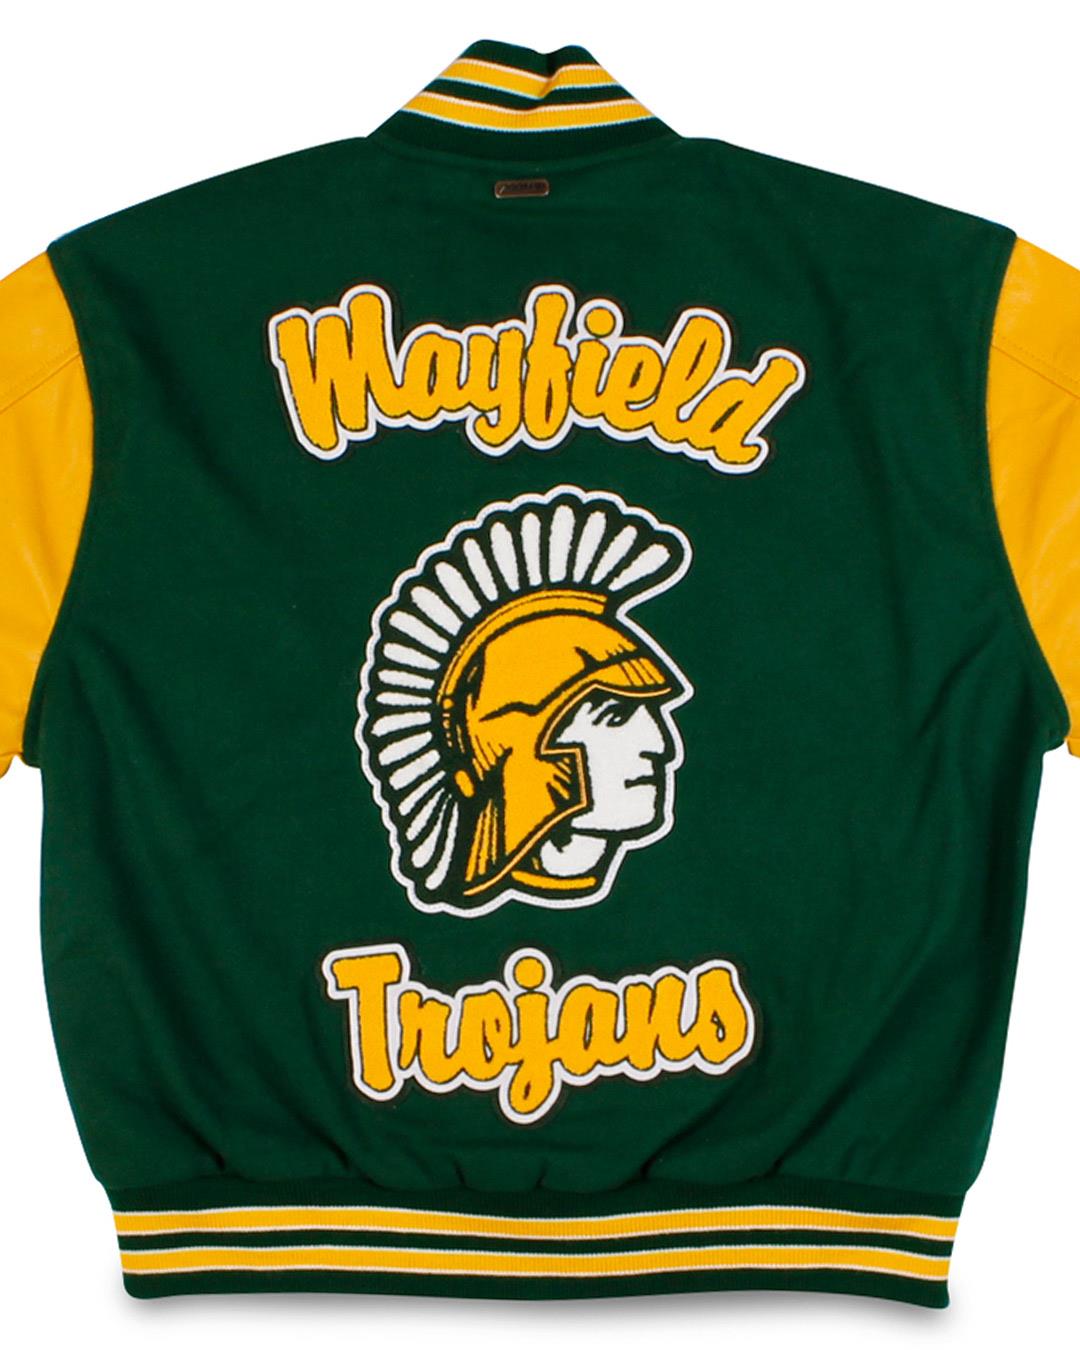 Mayfield High School Letterman Jacket, Las Cruces NM - Back